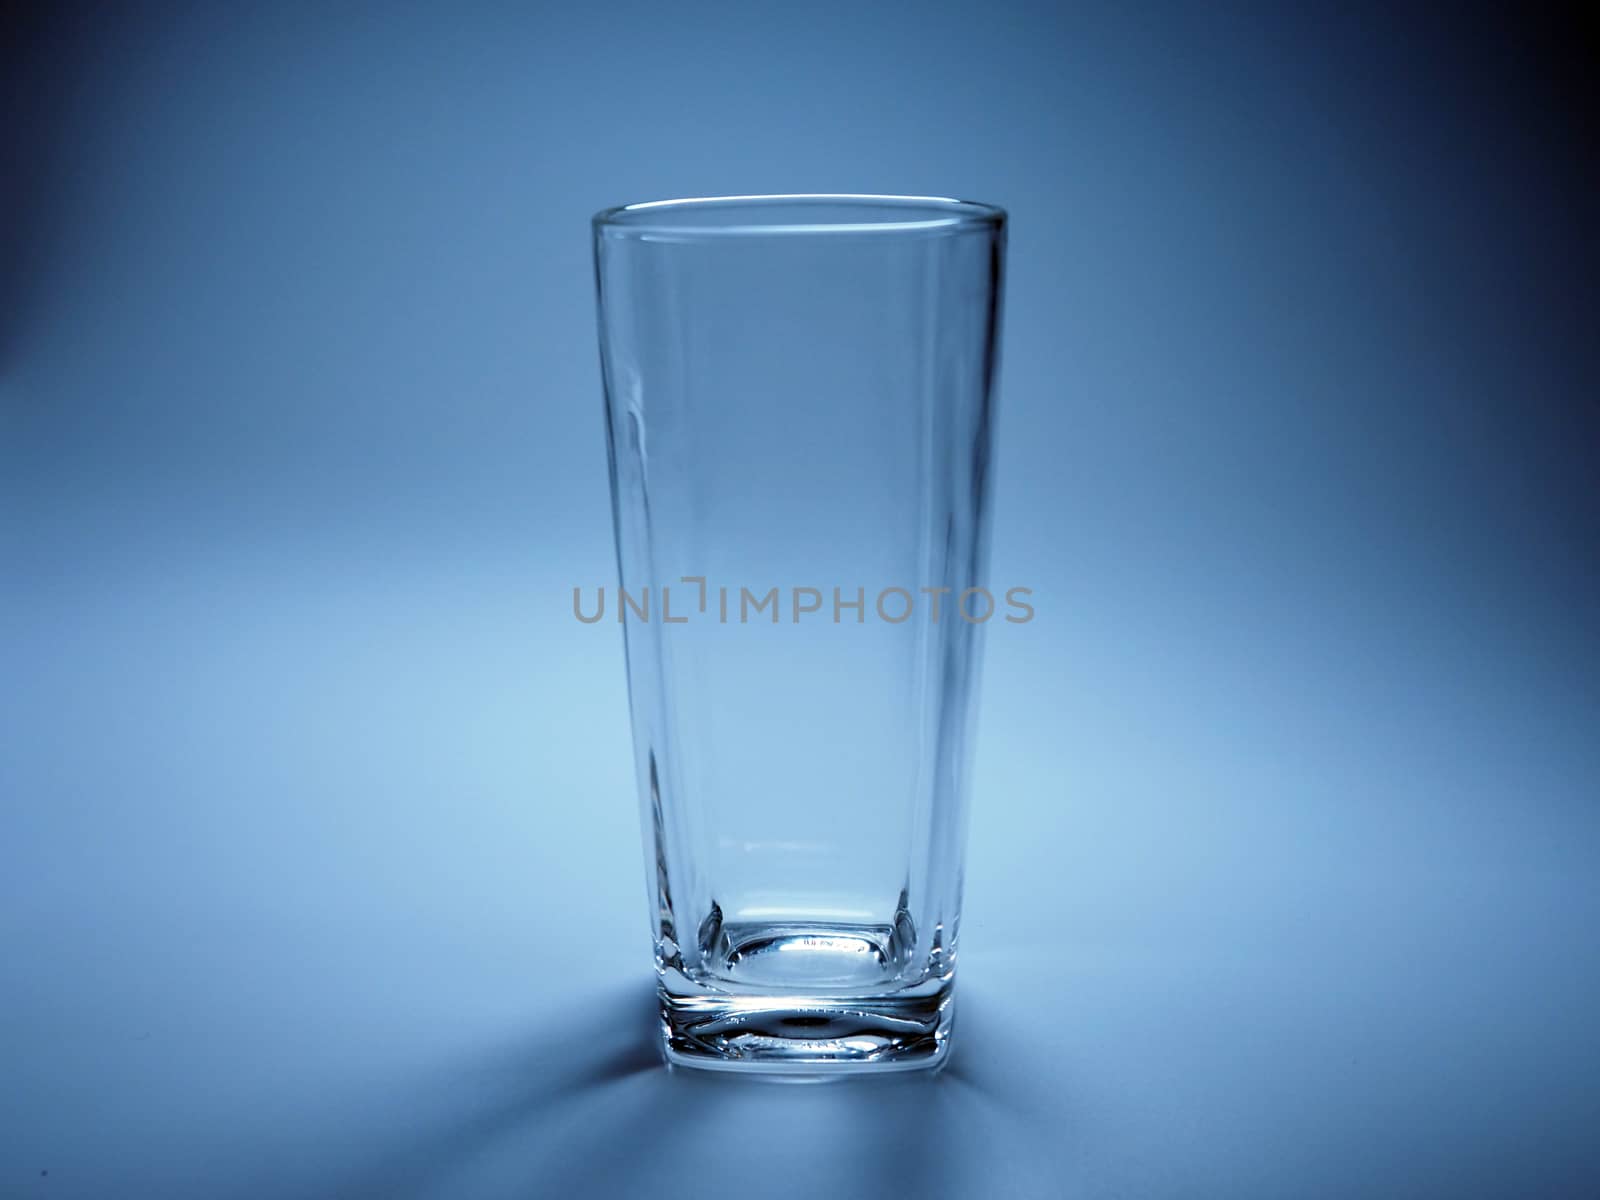 Empty glass On a blue background.